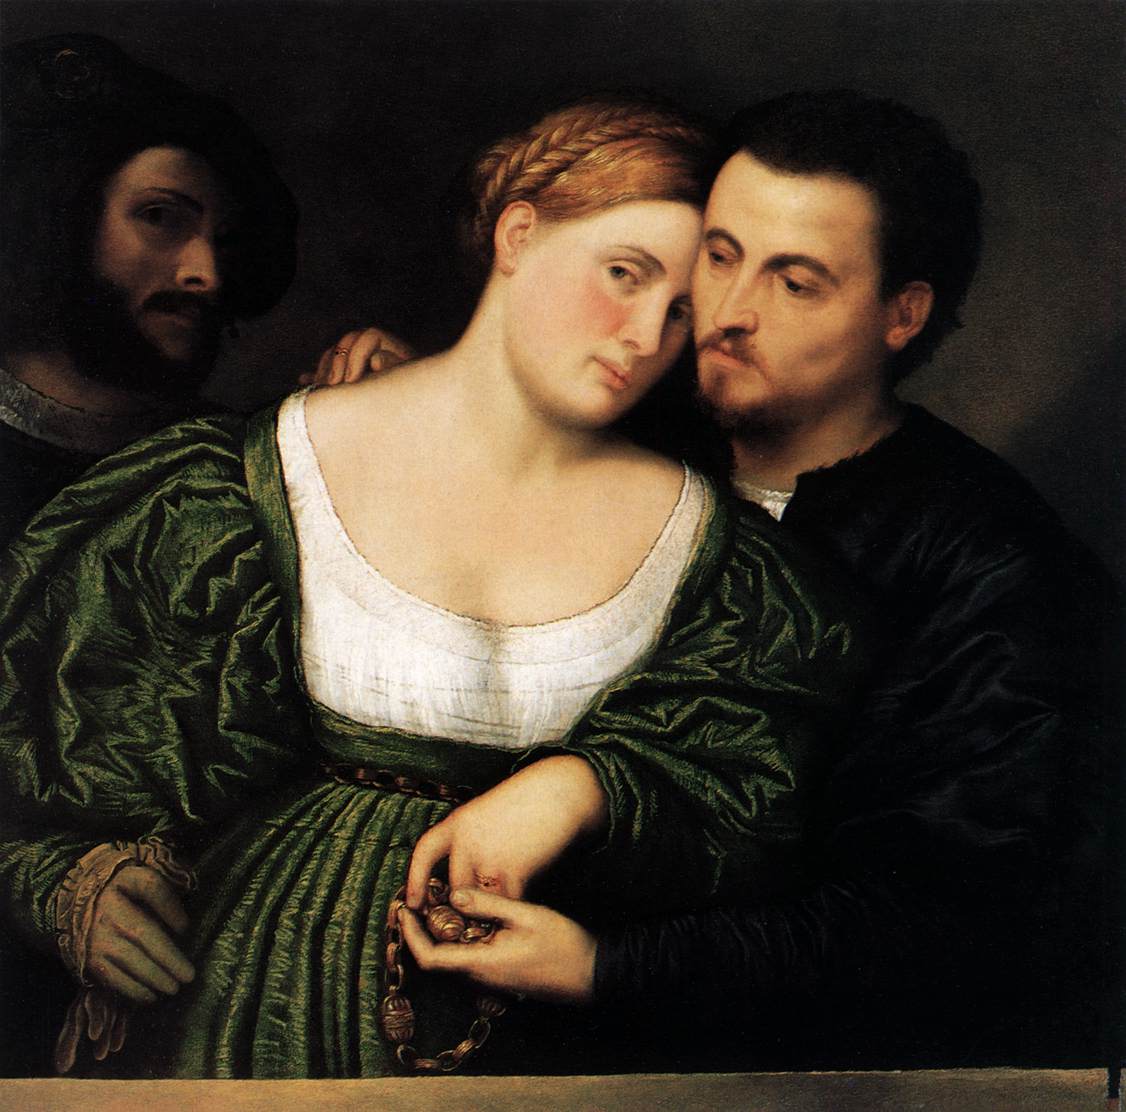 The Venetian Lovers by Paris Bordone, 1525